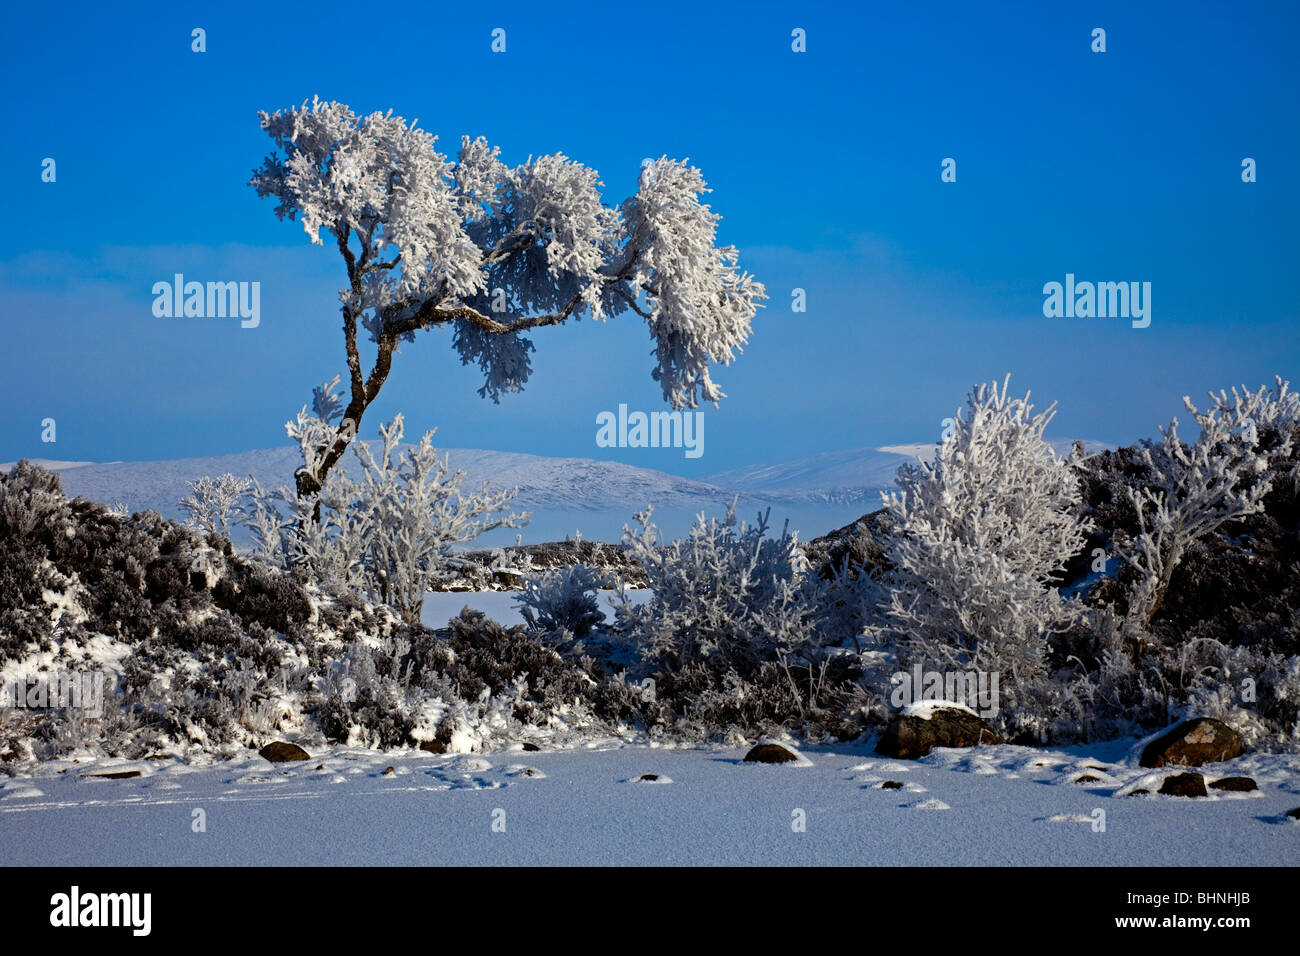 Iconic tree and snow covered frozen lochan Lochaber, Scotland UK Europe Stock Photo